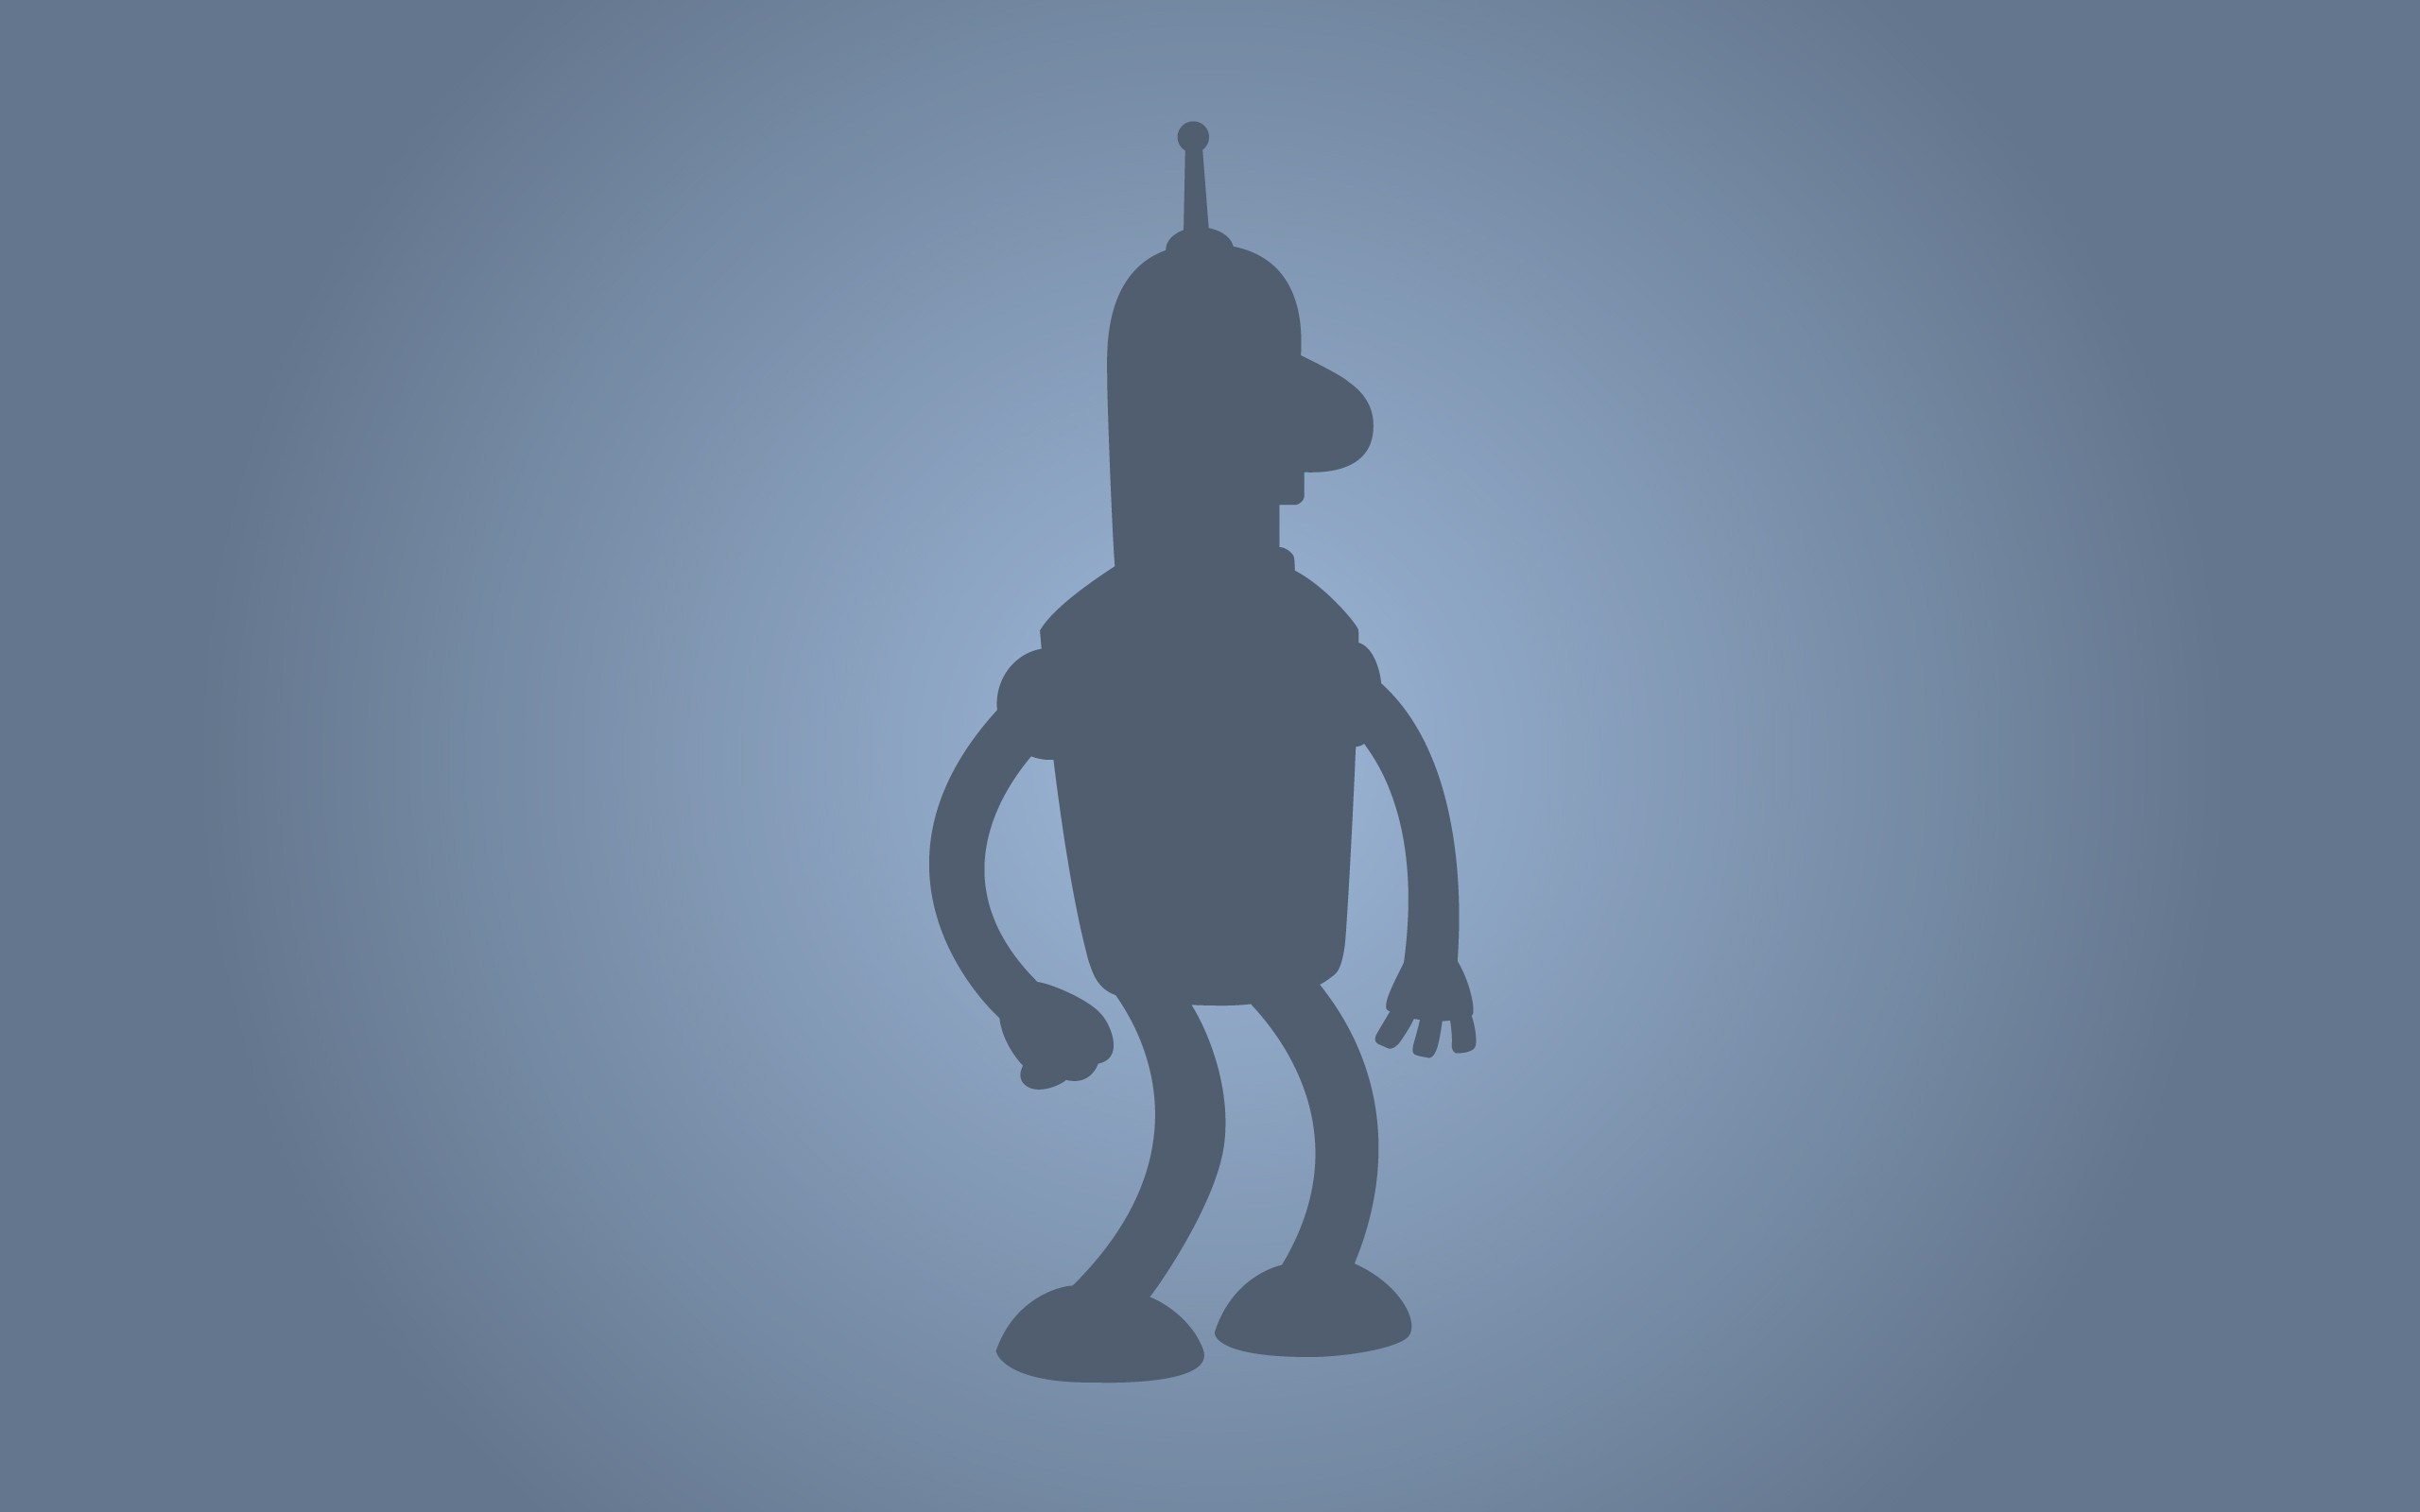 General 2560x1600 Bender minimalism Futurama TV series robot silhouette simple background